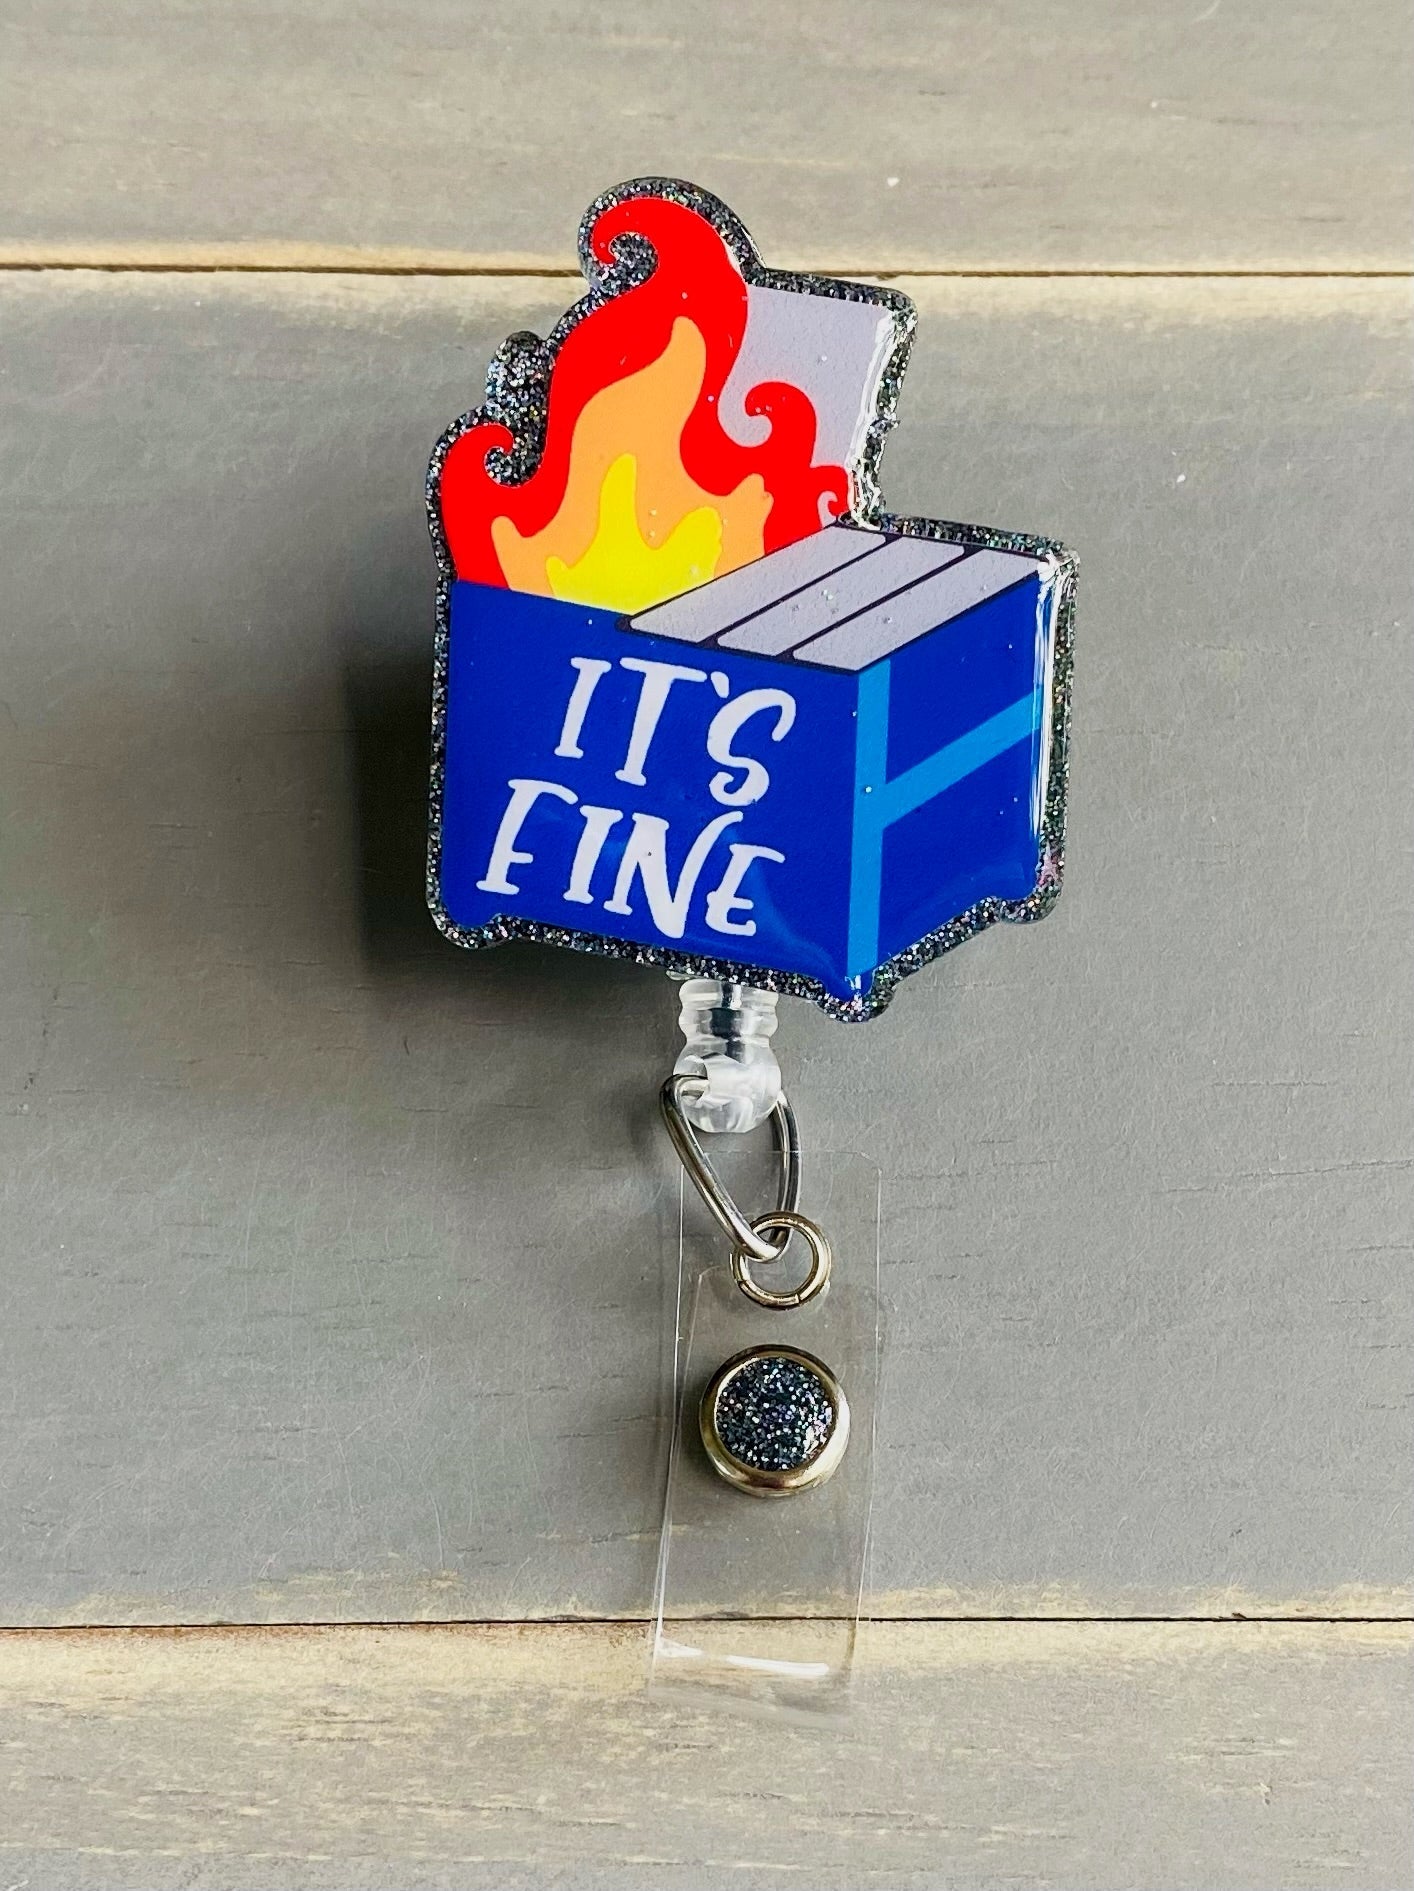 Blue Dumpster on Fire Badge Reel – Spicy Badge Reels